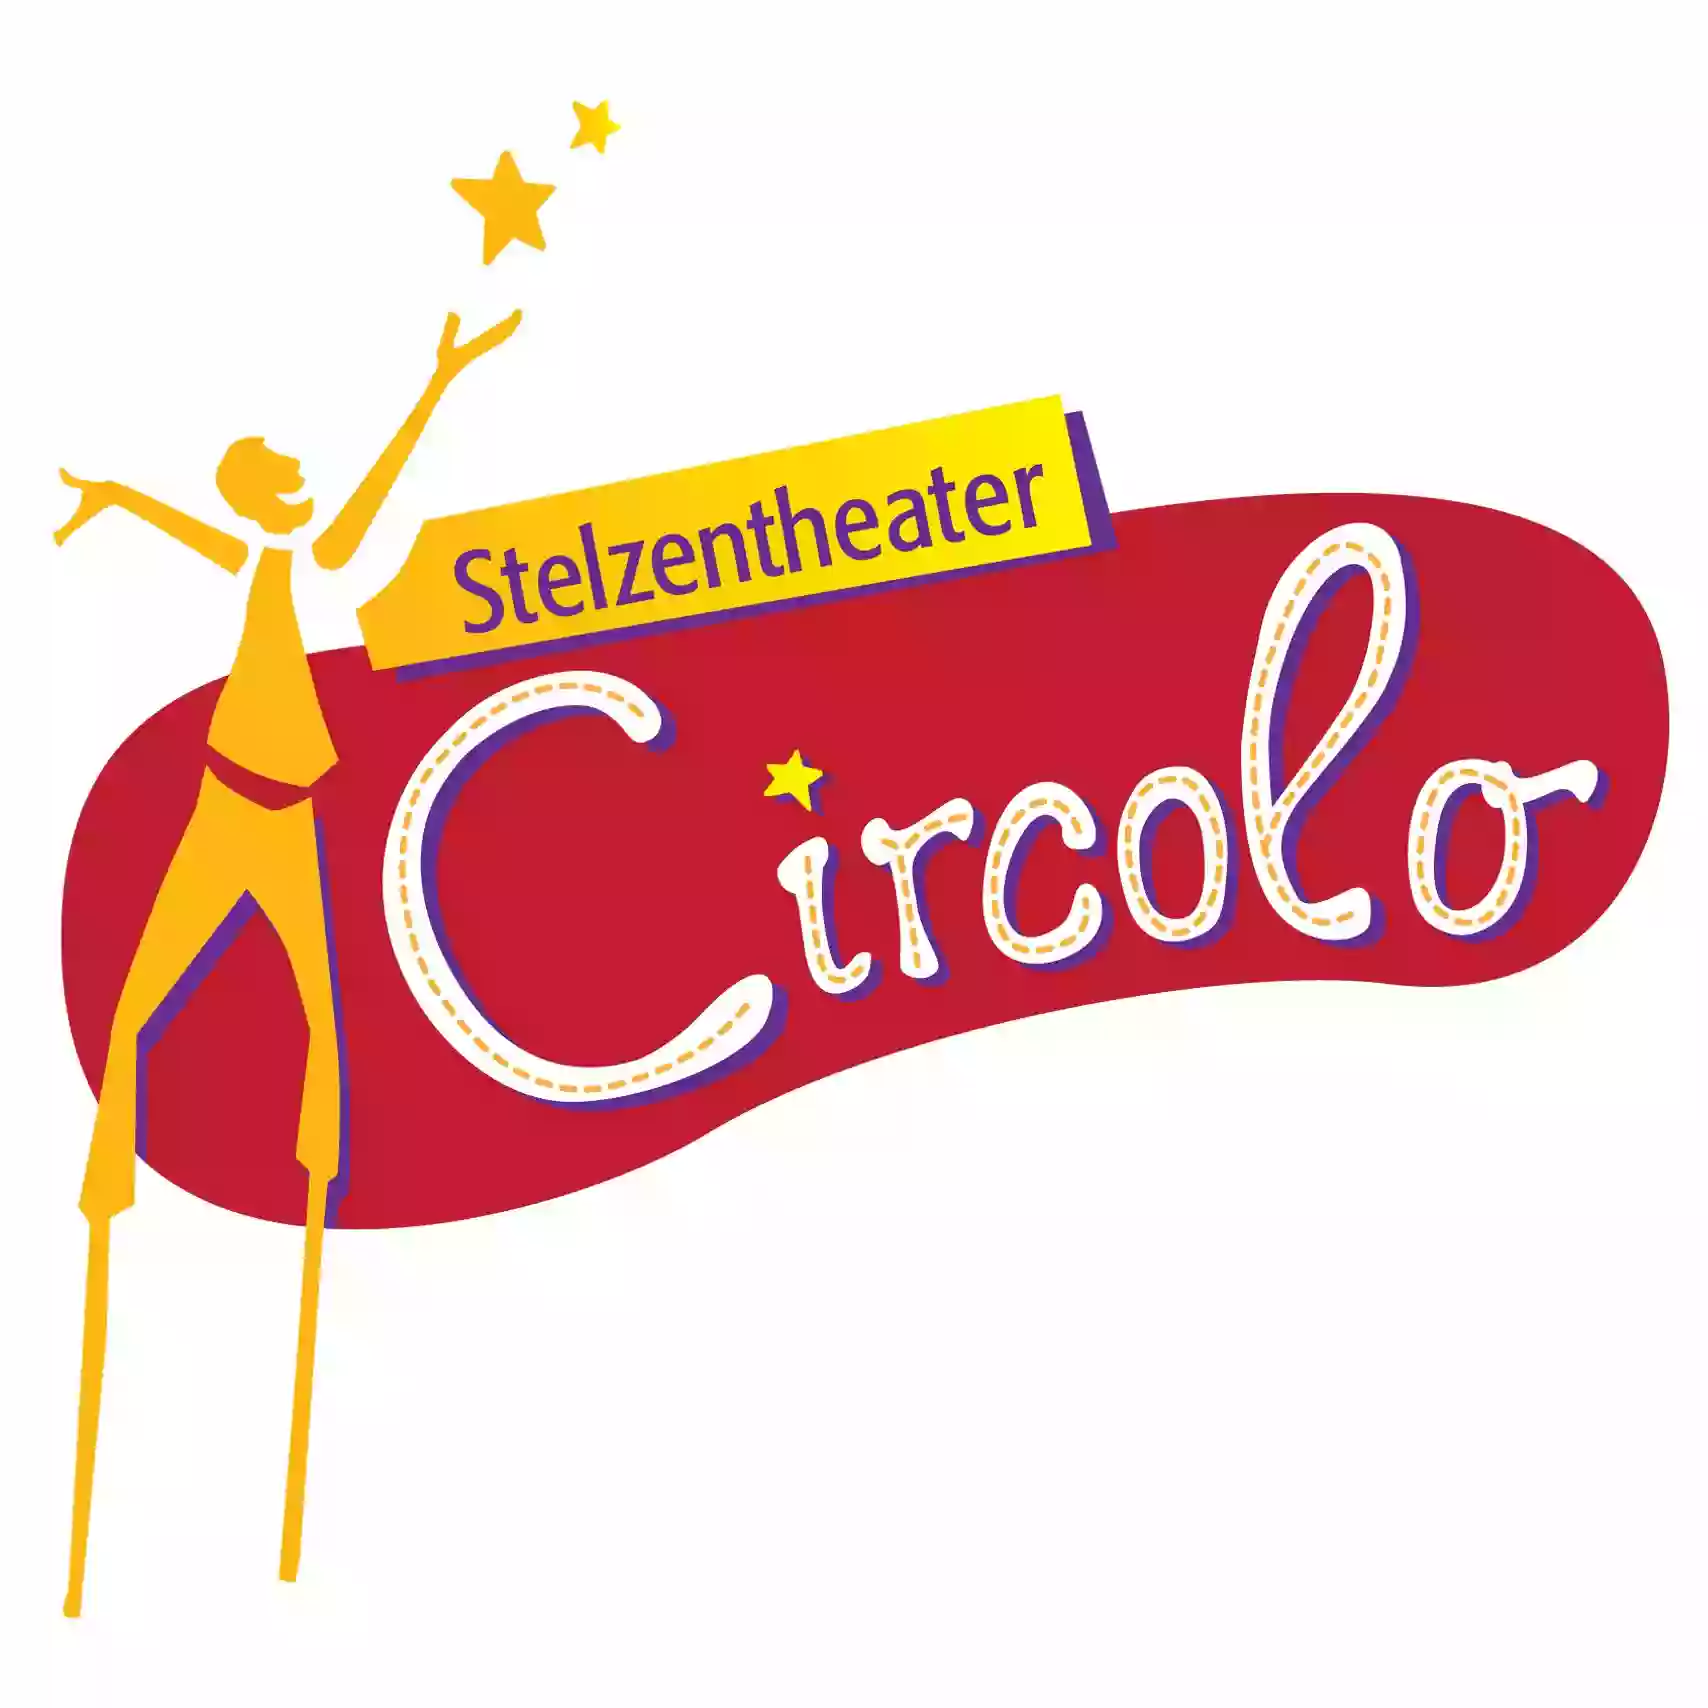 Stelzentheater Circolo